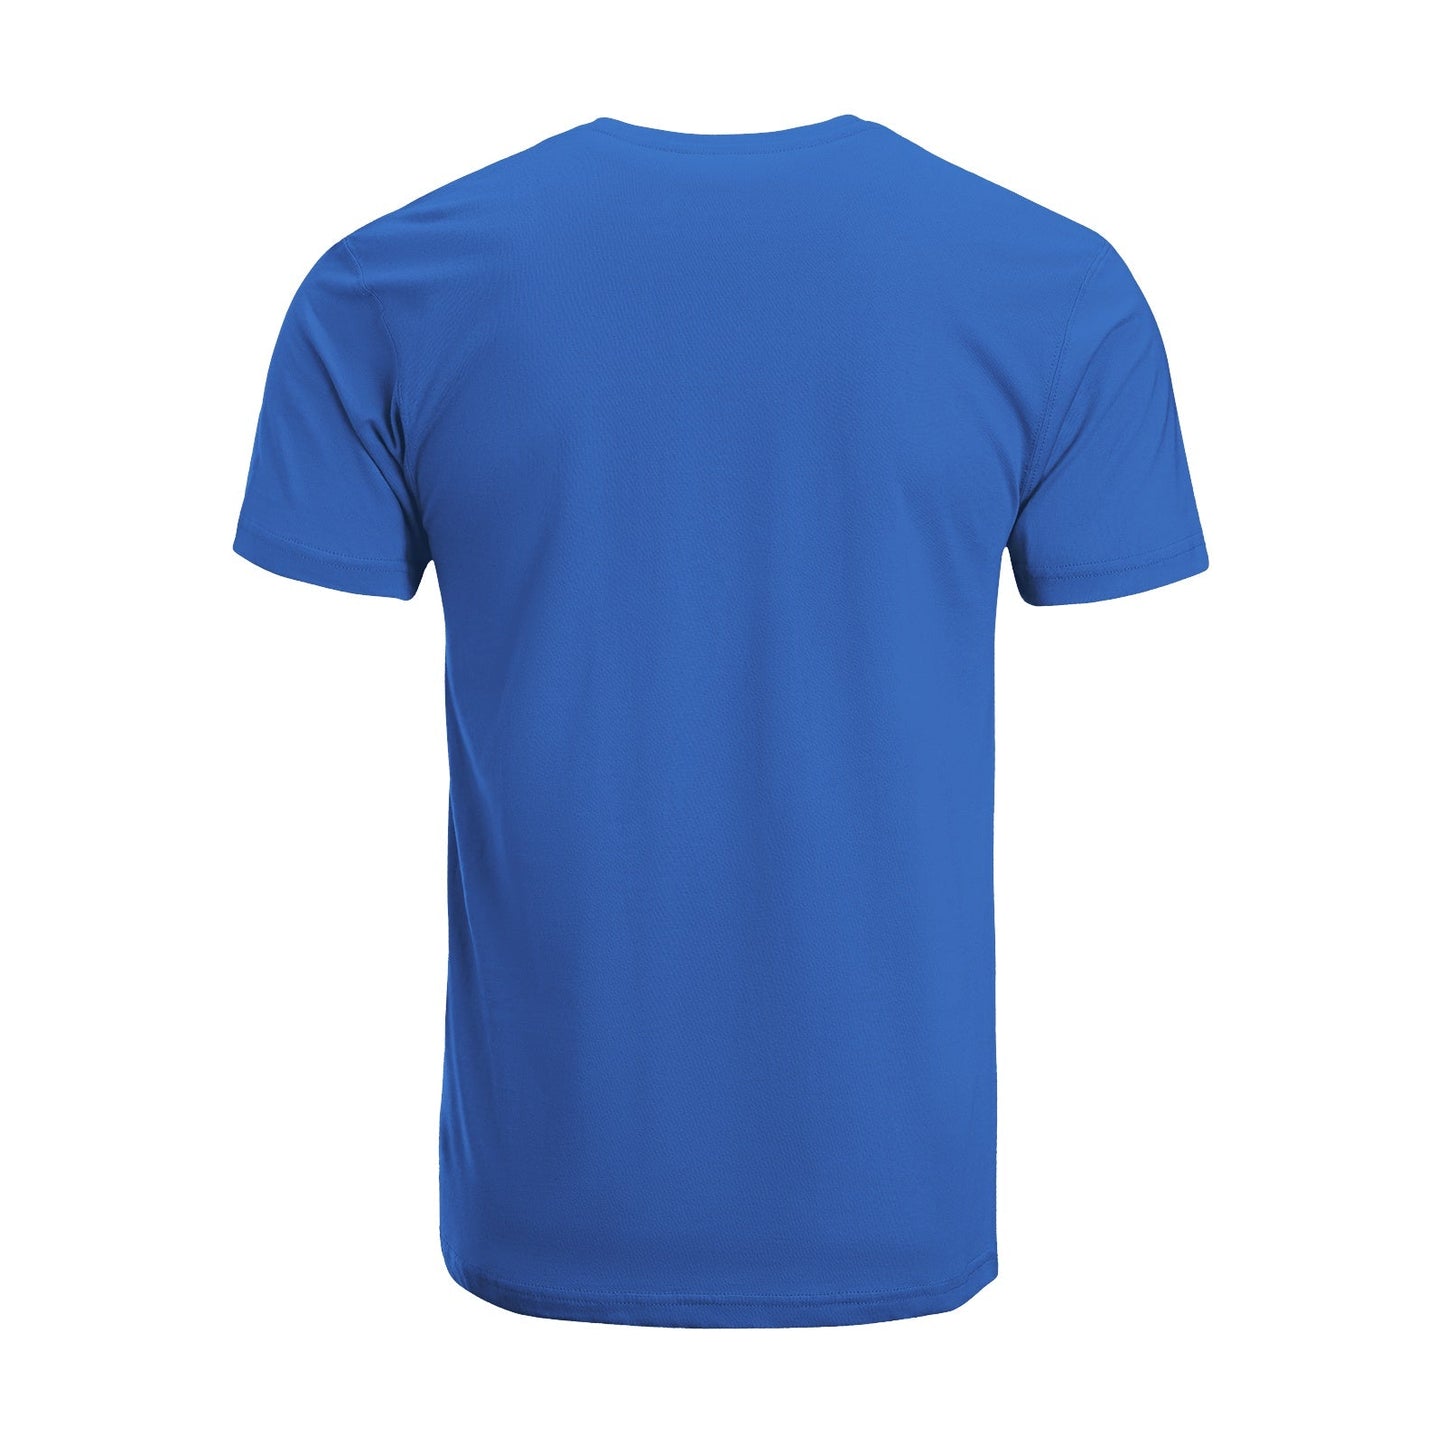 Unisex Short Sleeve Crew Neck Cotton Jersey T-Shirt MOM 44